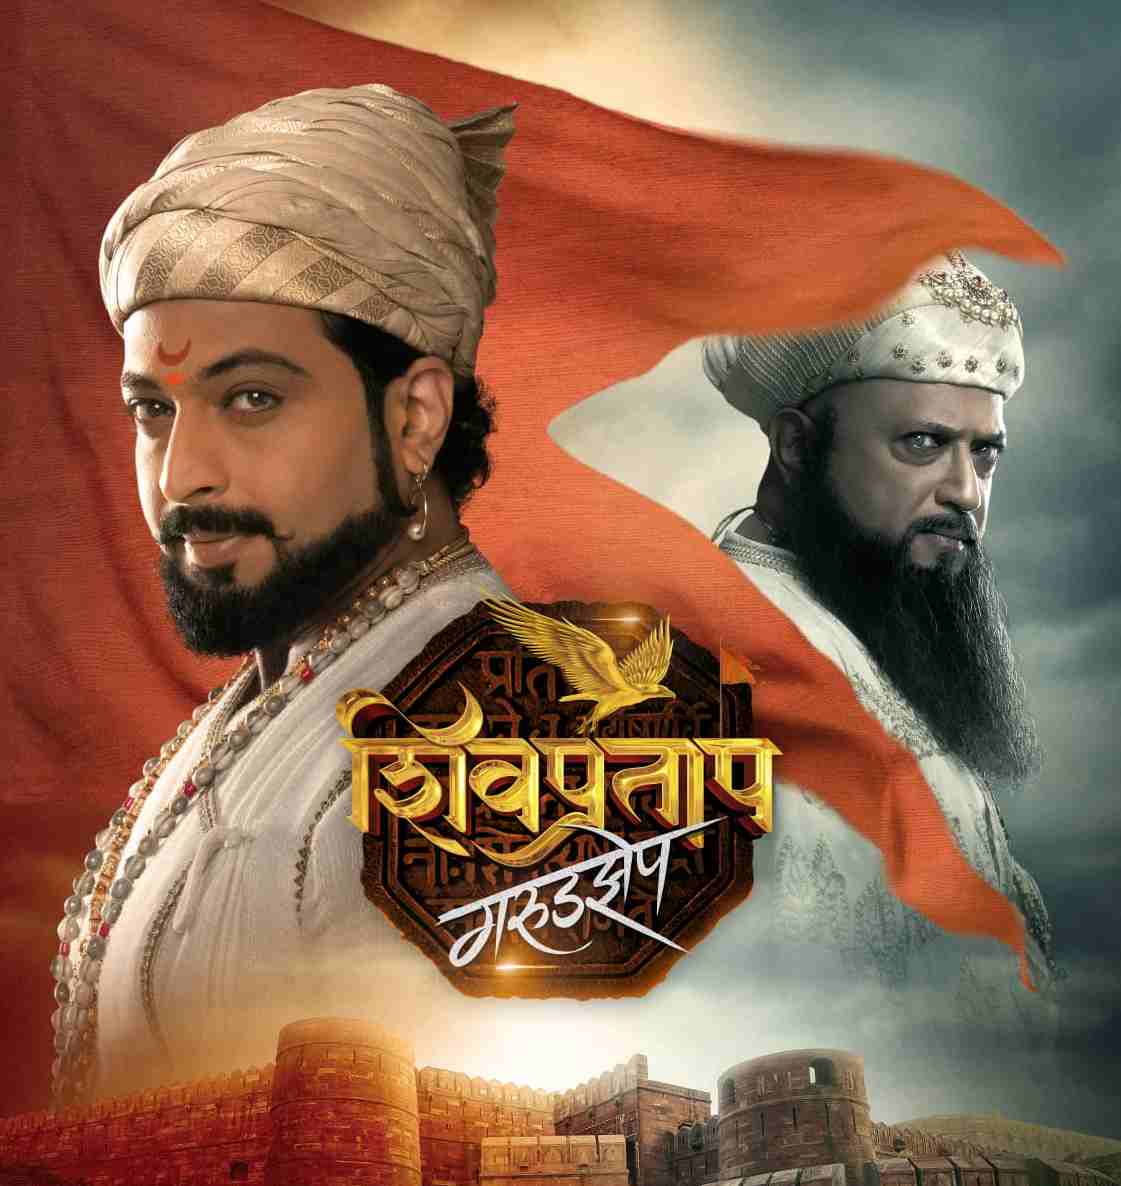 On 5th October 2022, Marathi Film Shiv Pratap - Garudjhep will be releasing